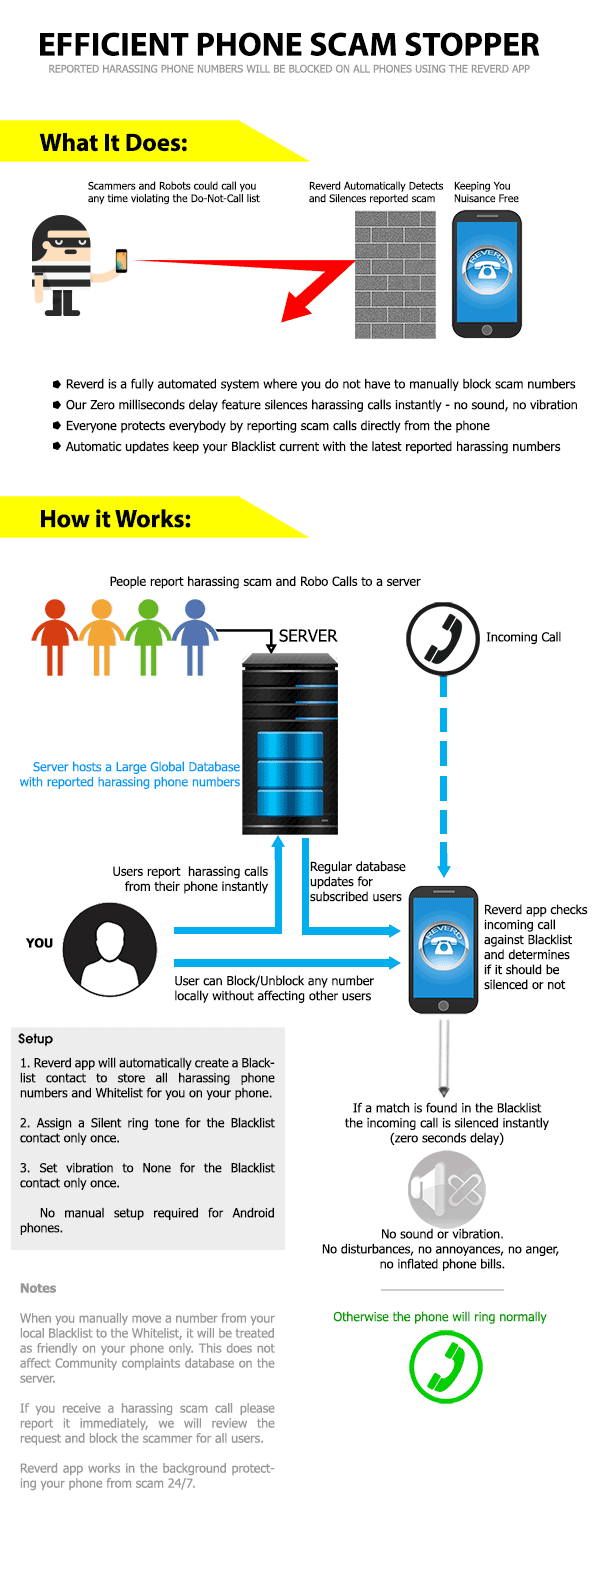 Reverd - How it works infographic